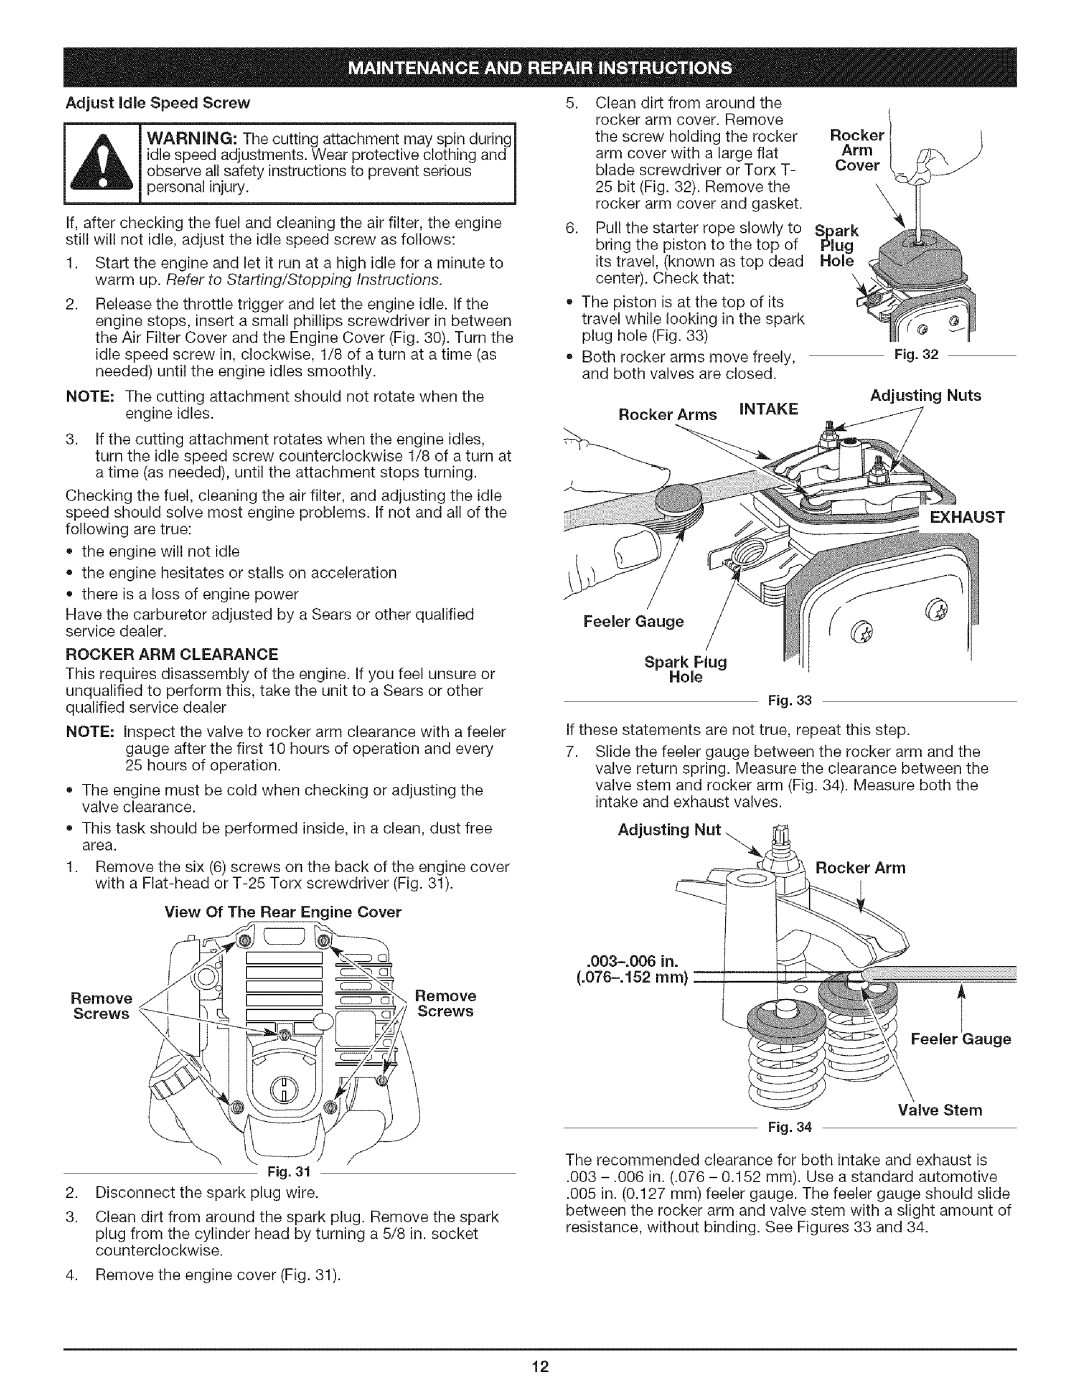 Craftsman 316.79197 manual AdjustIdleSpeedScrew, WARNING:Thecuttingattachmentmayspinduring, Cleandirtfromaroundthe 